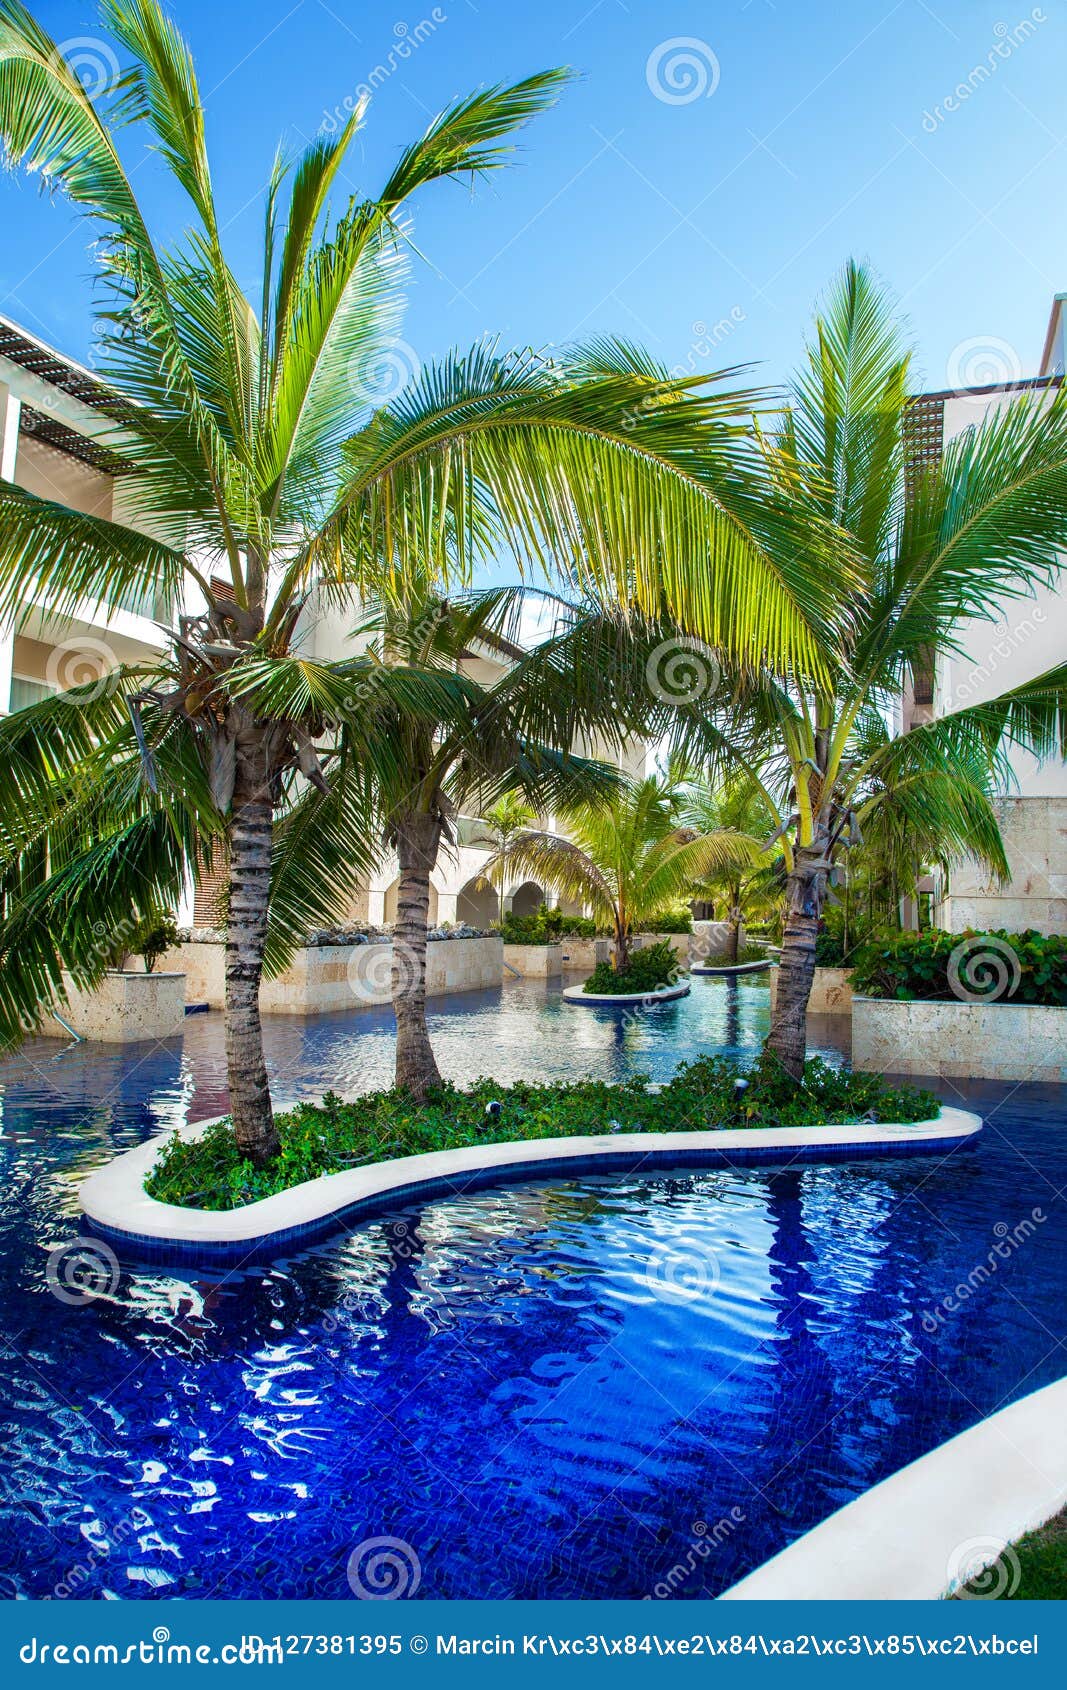 dominican republic, punta cana, saona island - mano juan beach, hotel, swimpool. fishermen`s village